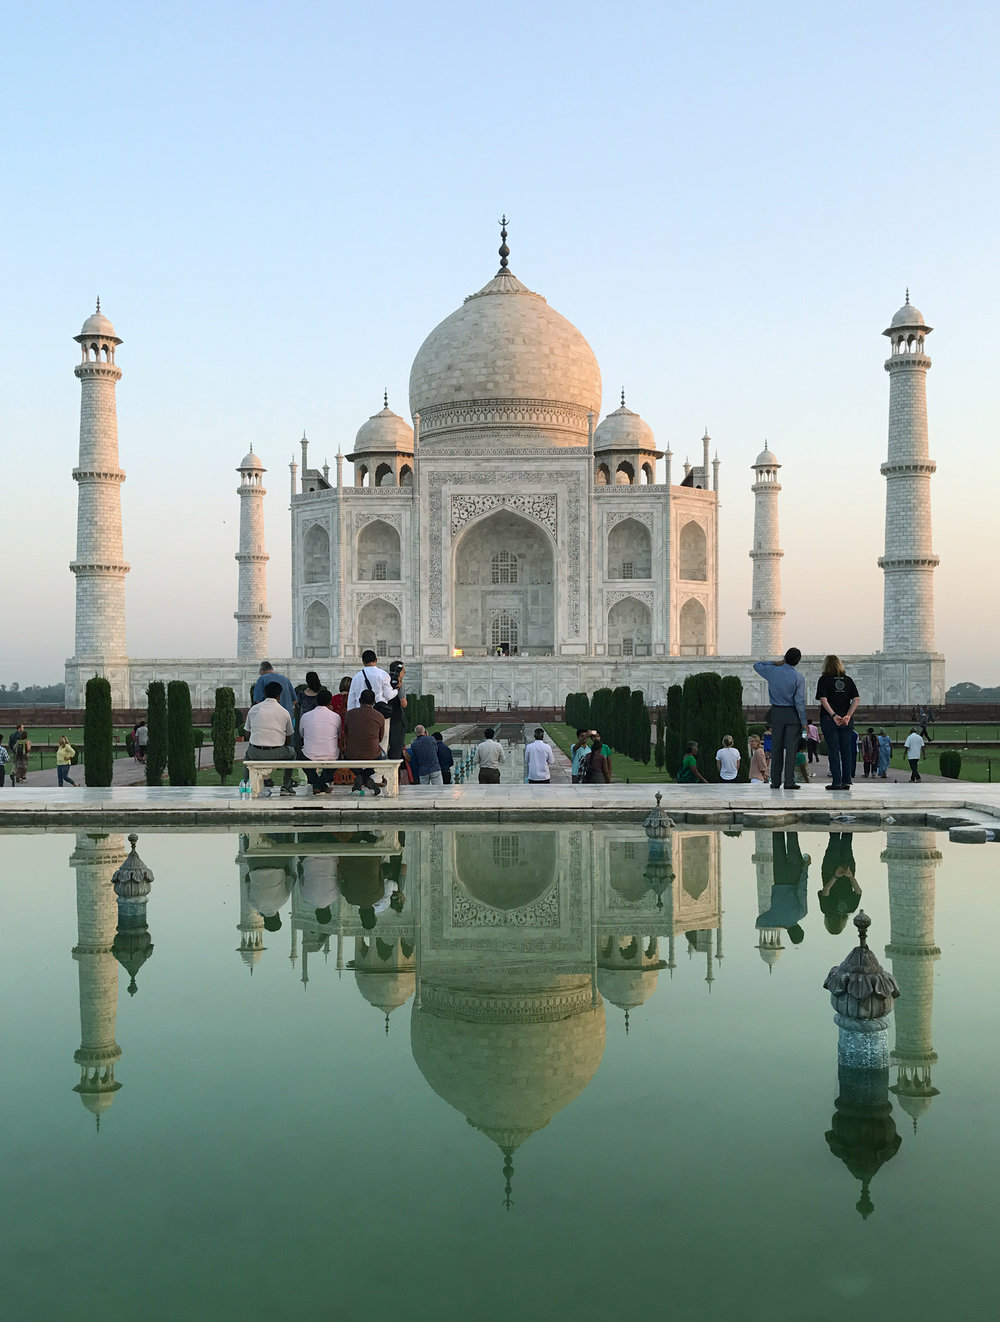 Here it is, the breathtaking Taj Mahal!